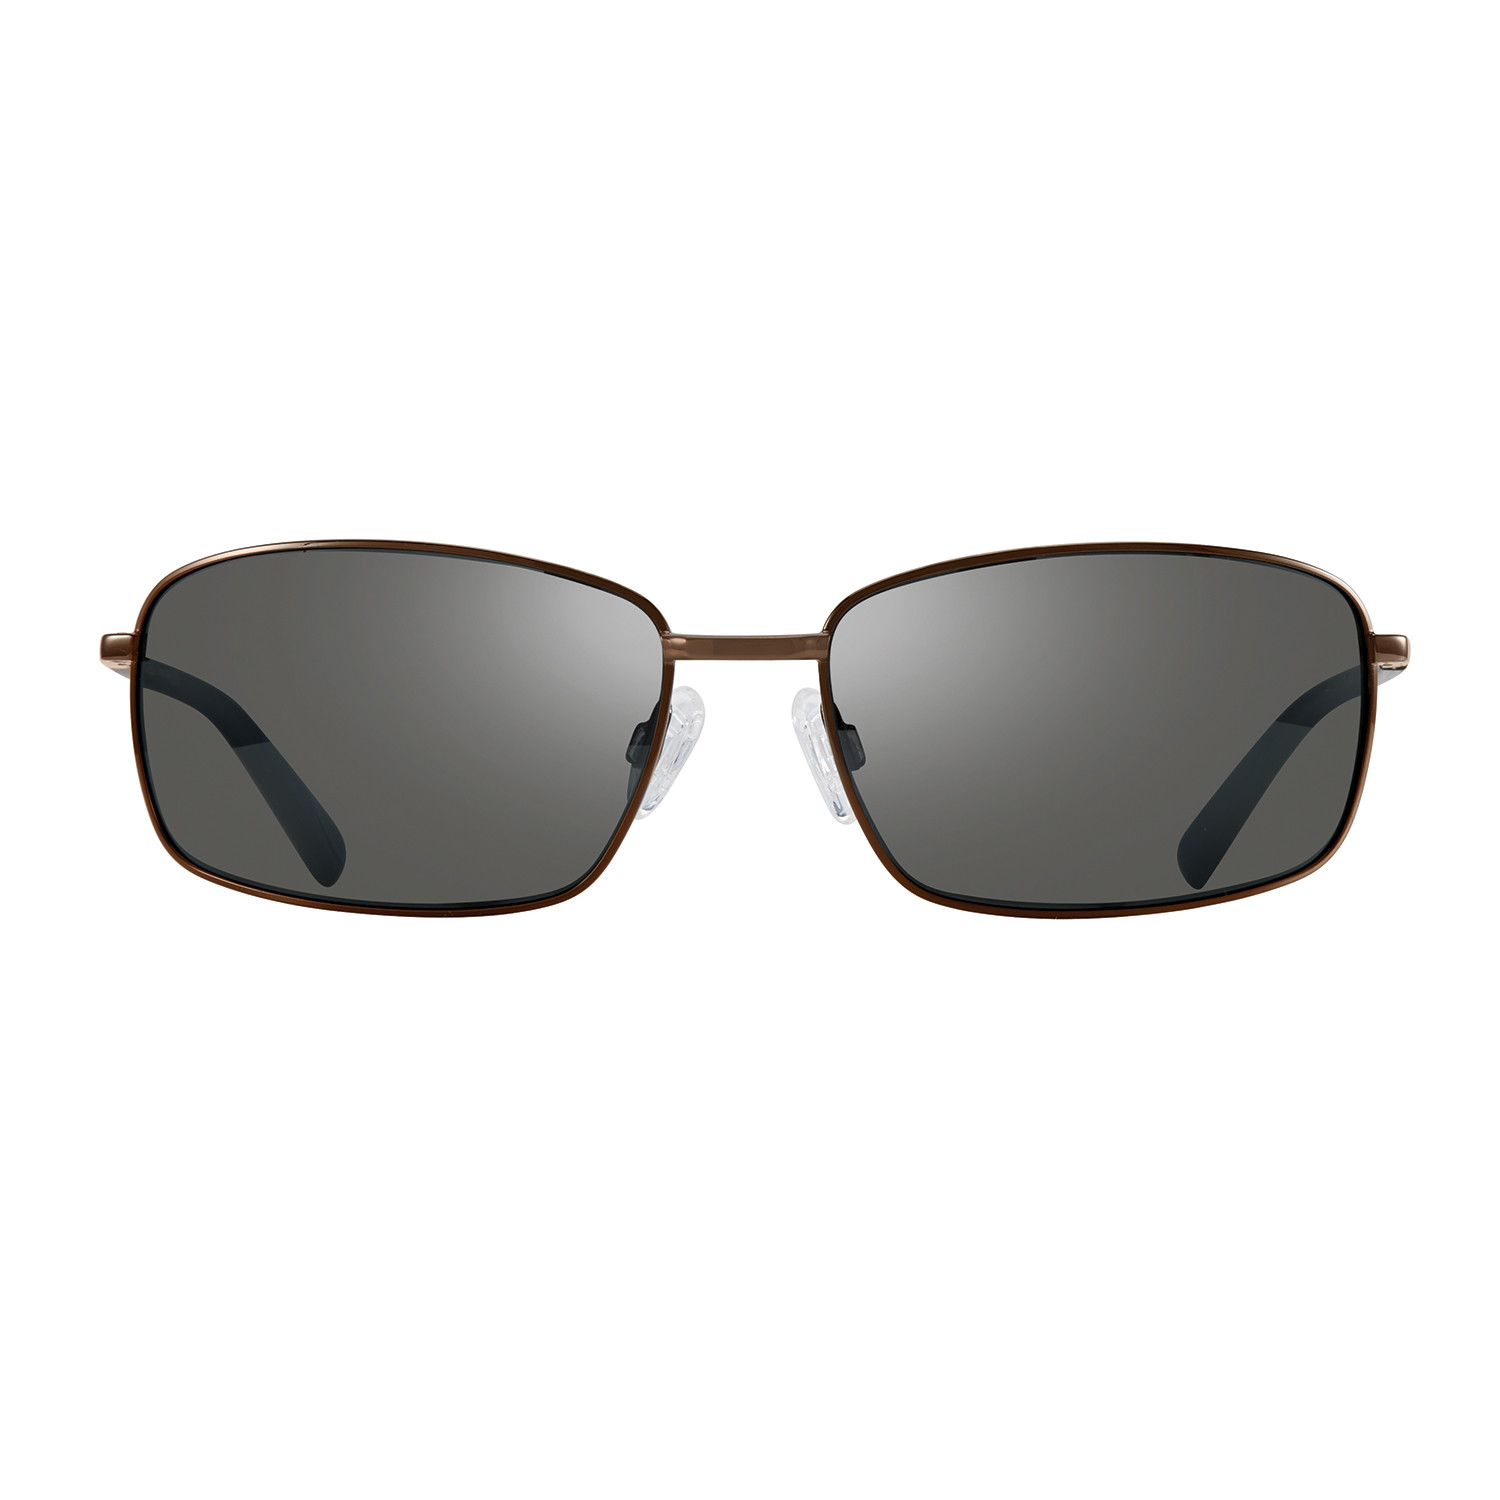 Tate S Polarized Sunglasses // Gunmetal // Graphite Lens - Revo - Touch ...